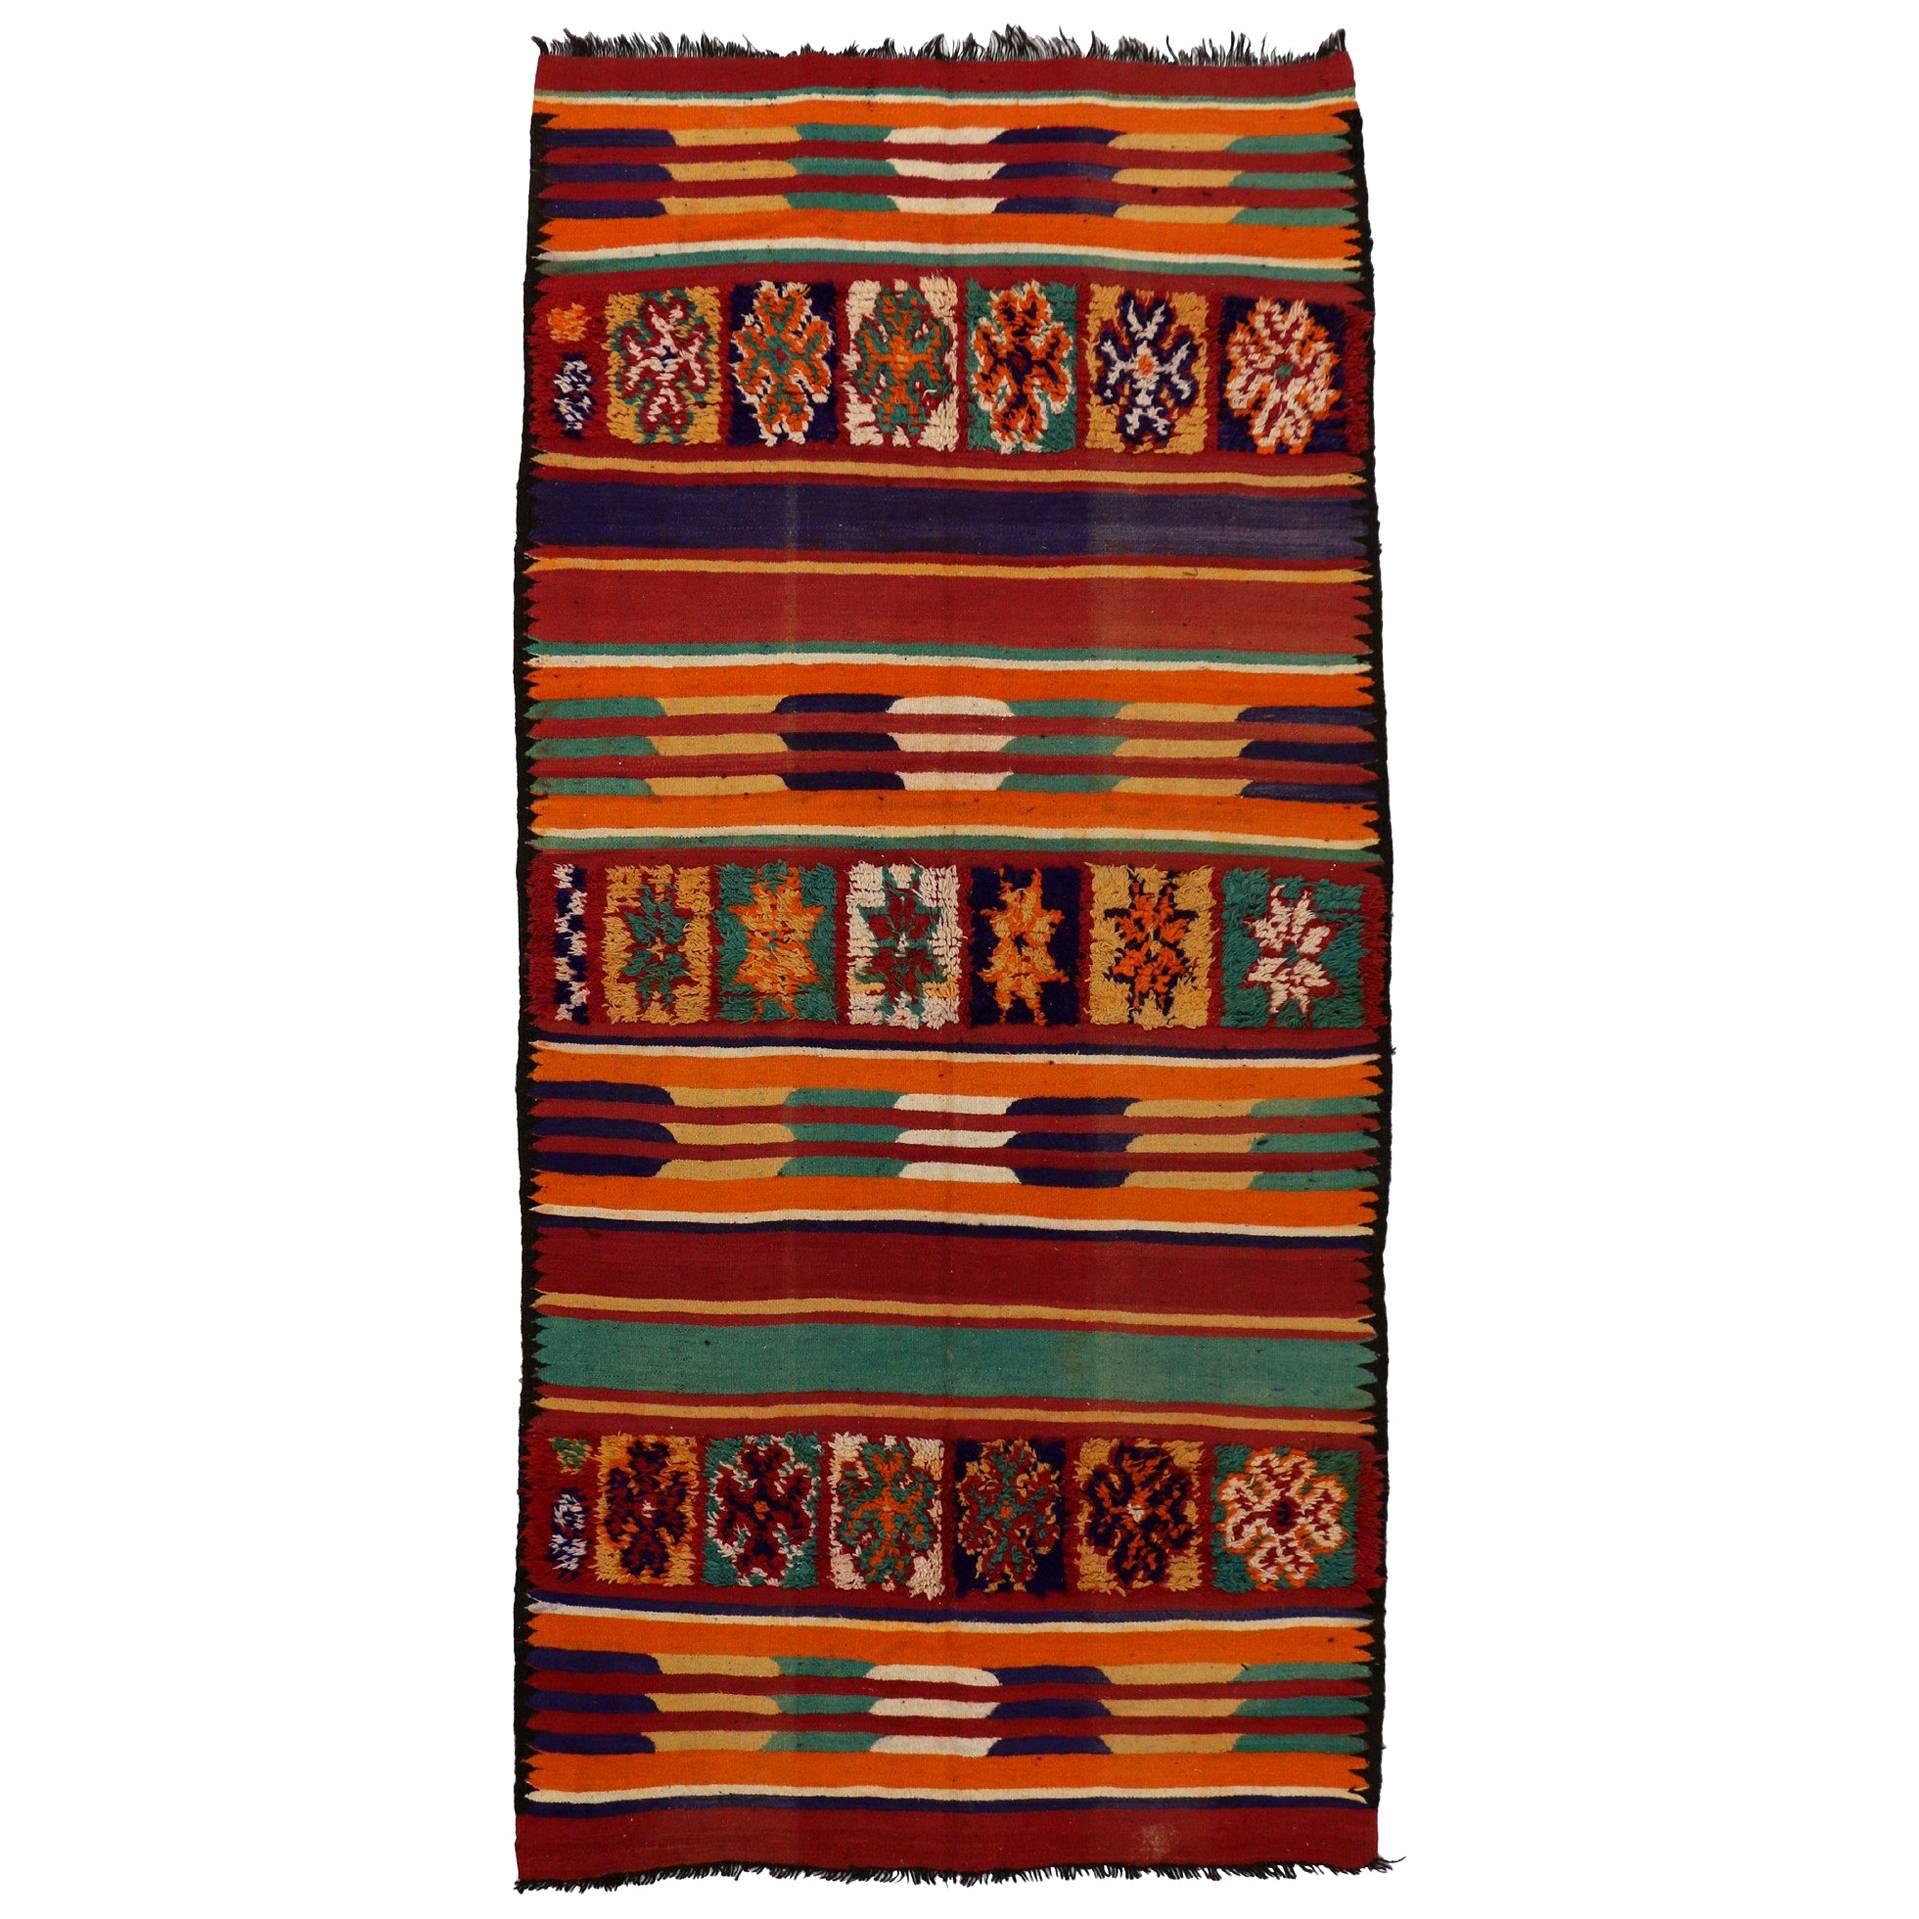 Tapis Kilim berbère marocain vintage avec style cabine moderne, tapis Kilim à tissage plat